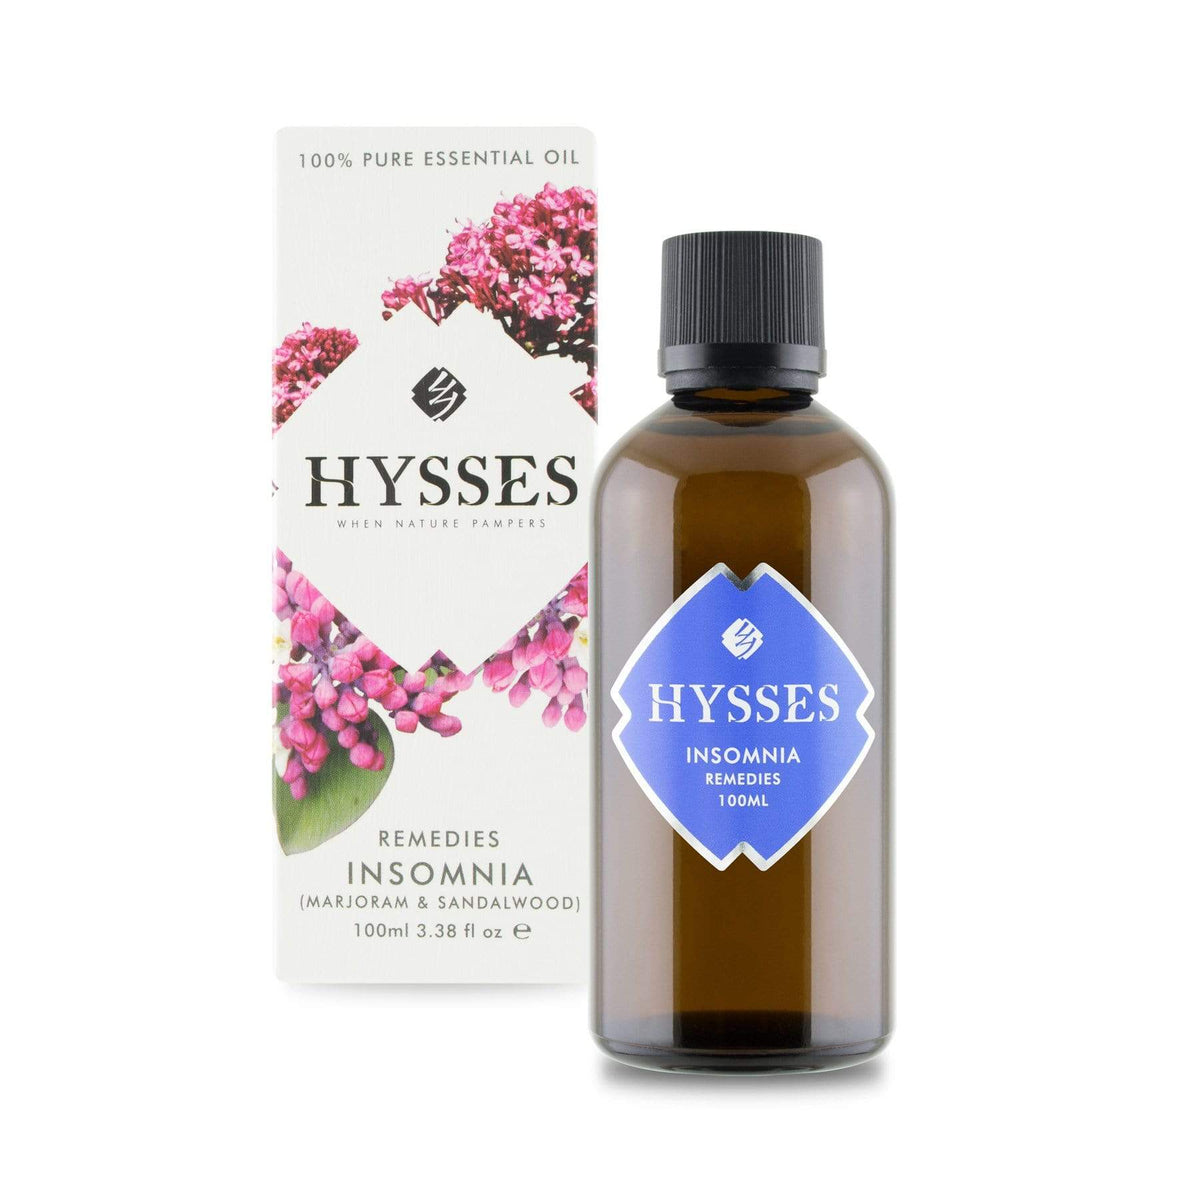 Hysses Essential Oil 100ml Remedies, Insomnia